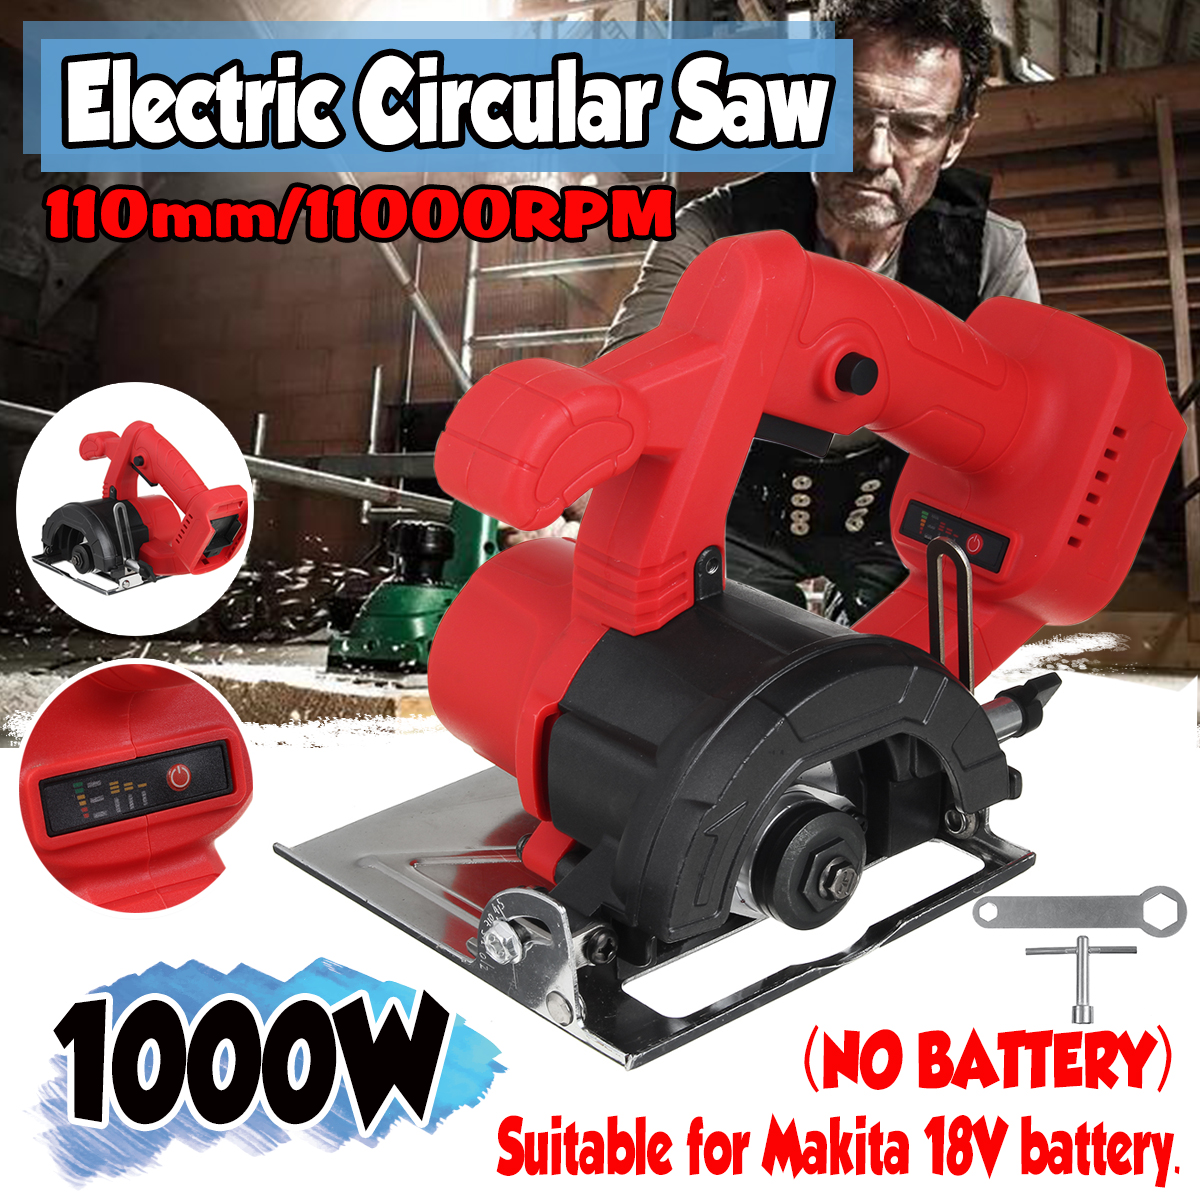 1000W-Cordless-Circular-Saw-Handheld-Powerful-Cutting-Brushless-Saw-For-Makita-18v-Battery-1757801-1